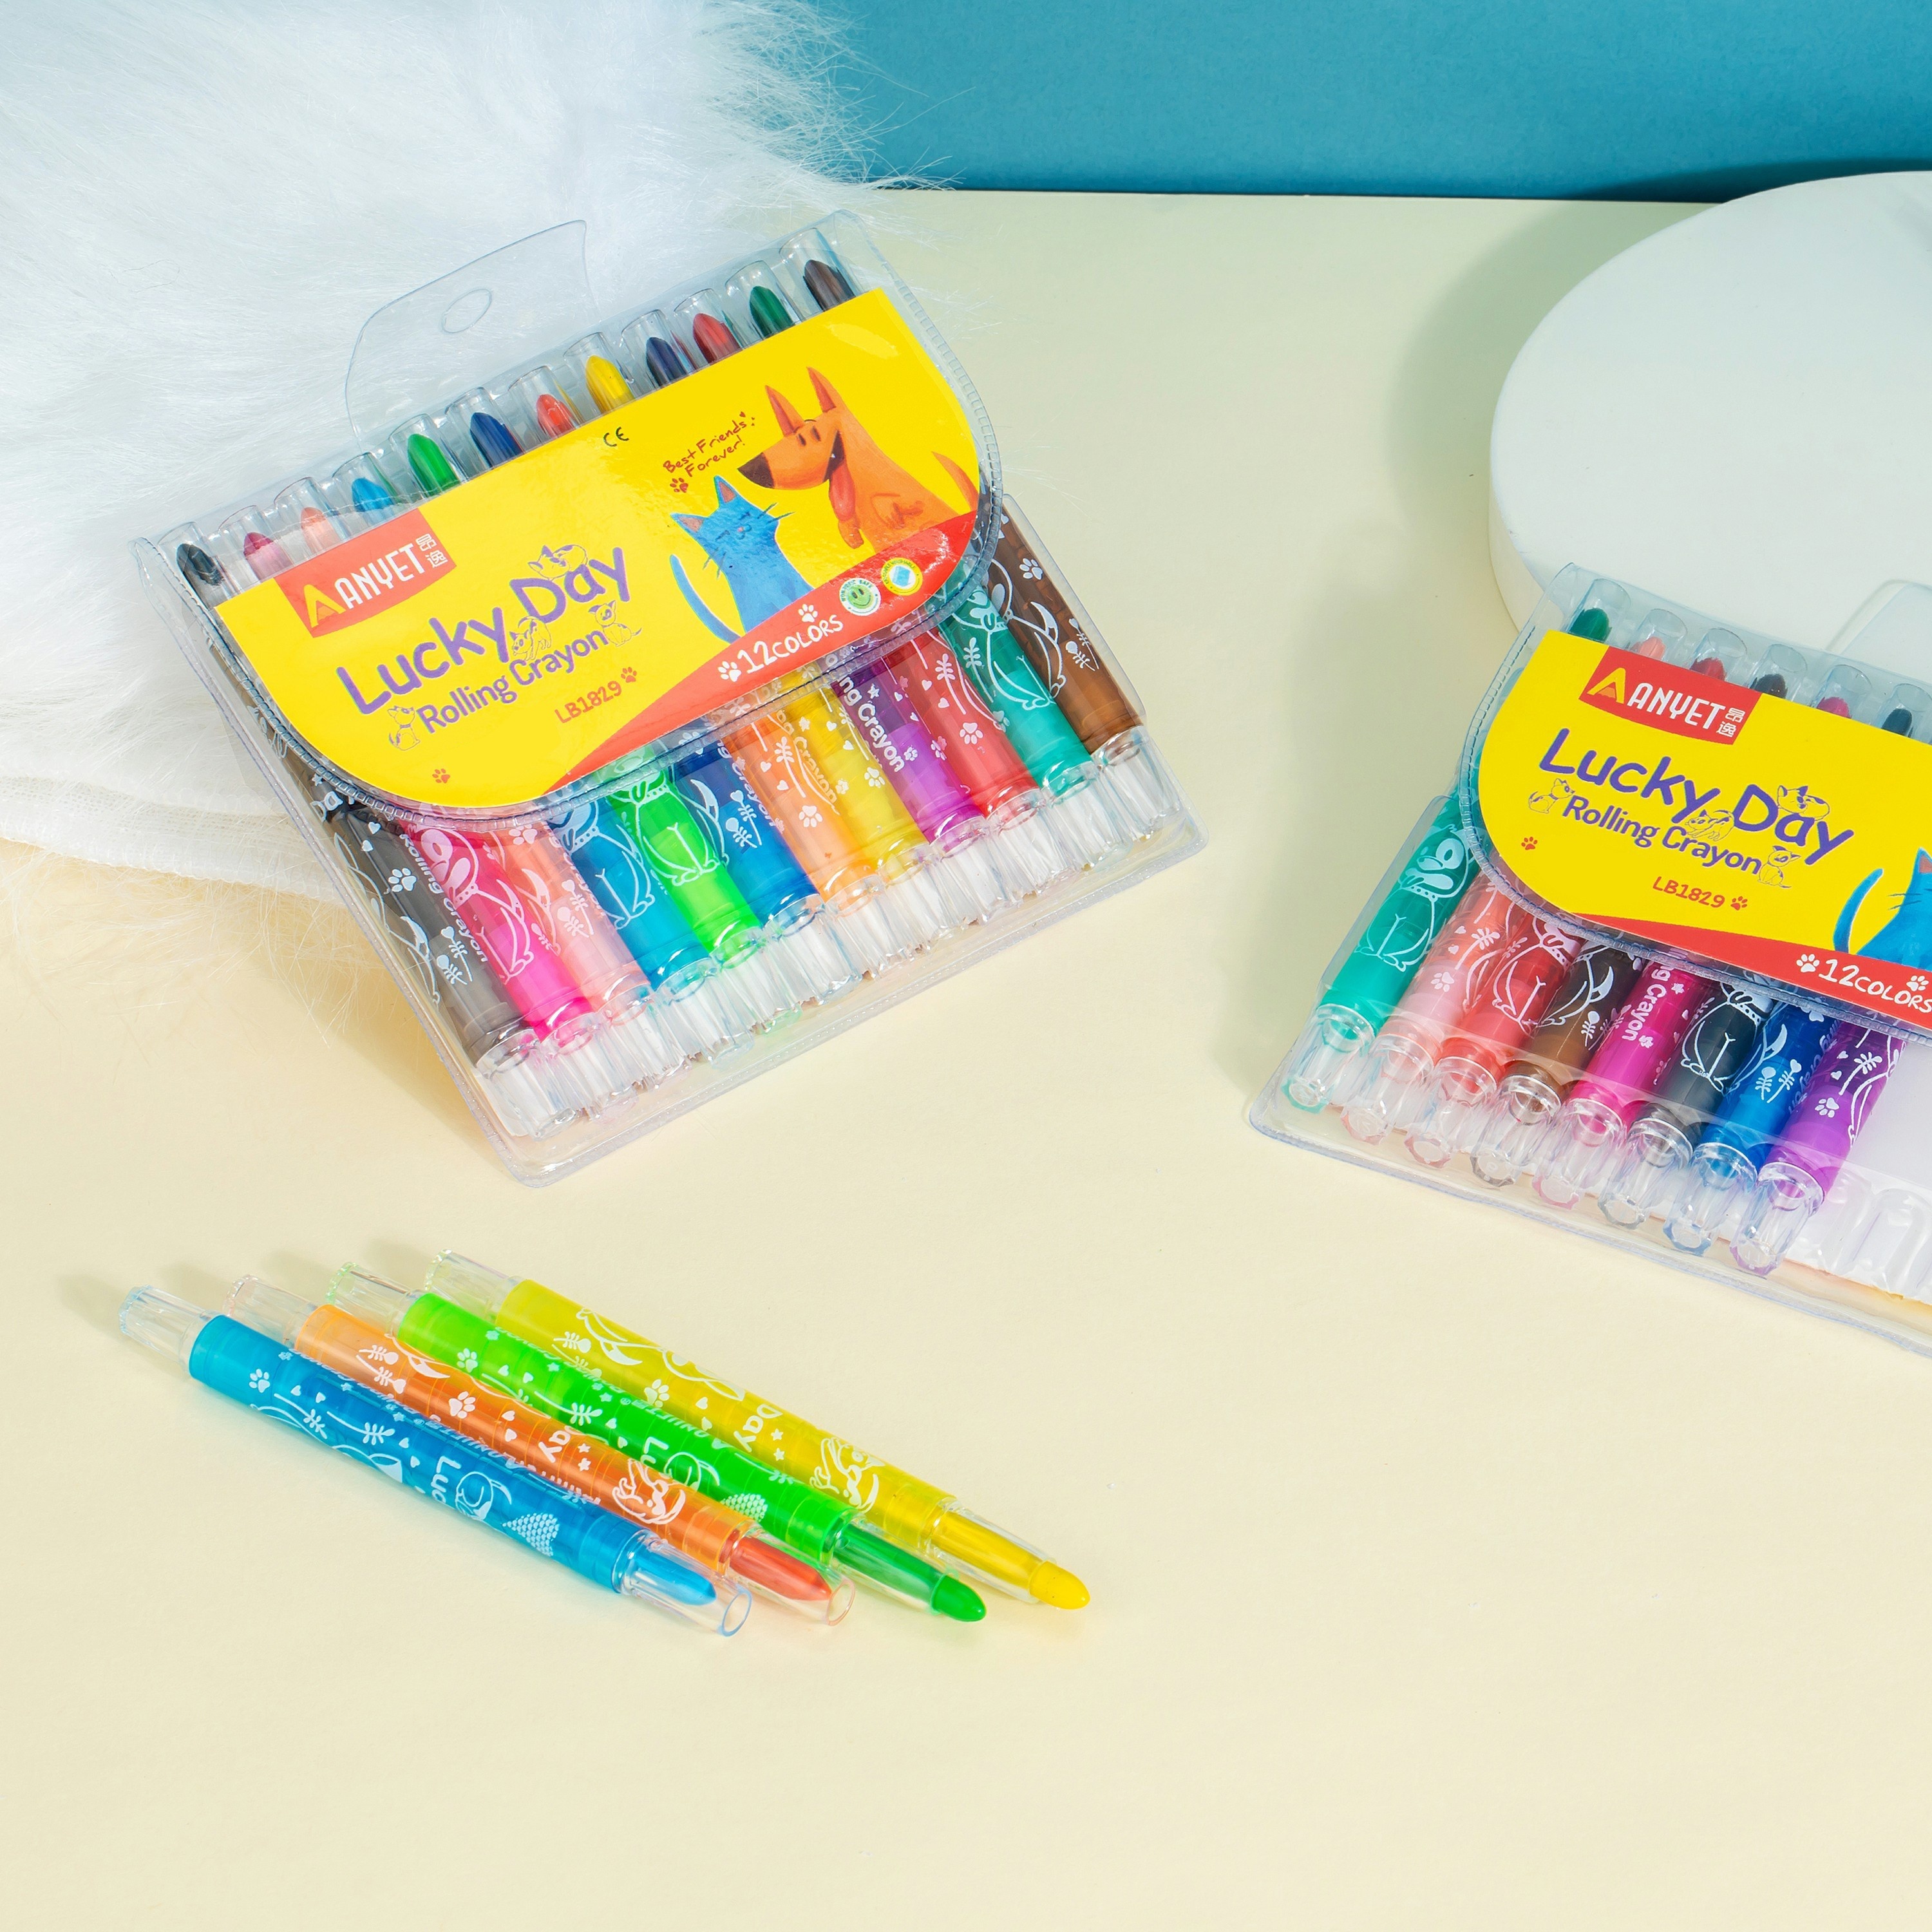 Twist Crayons For Kids - 24 Pcs Crayon Set For Kids, Coloring Kit